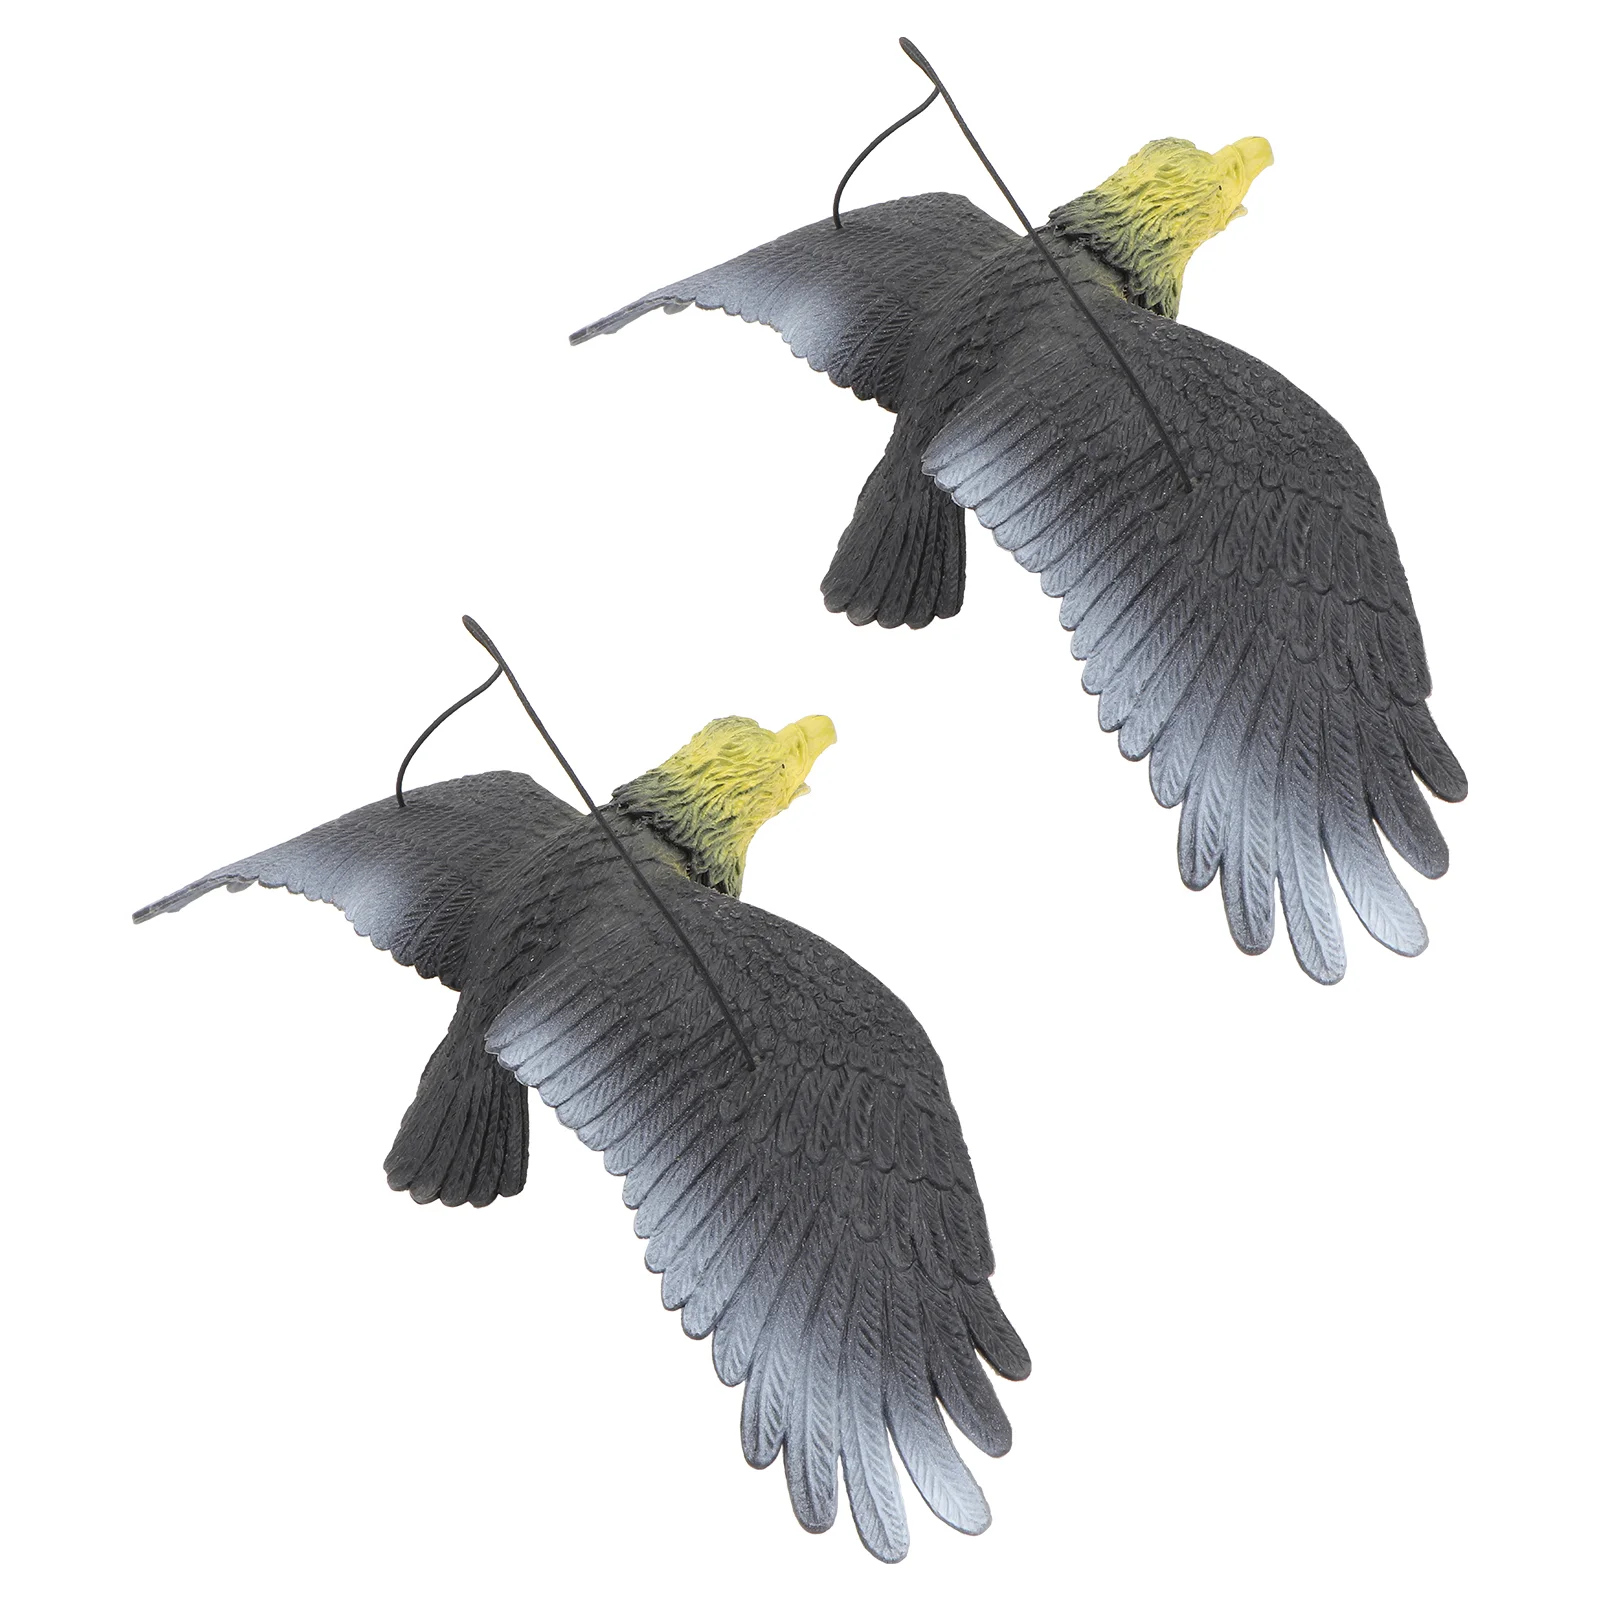 

2Pcs Emulation Eagle Model Pendant Eagle Action Figure Eagle Figurines Ornament Bird Fake Flying